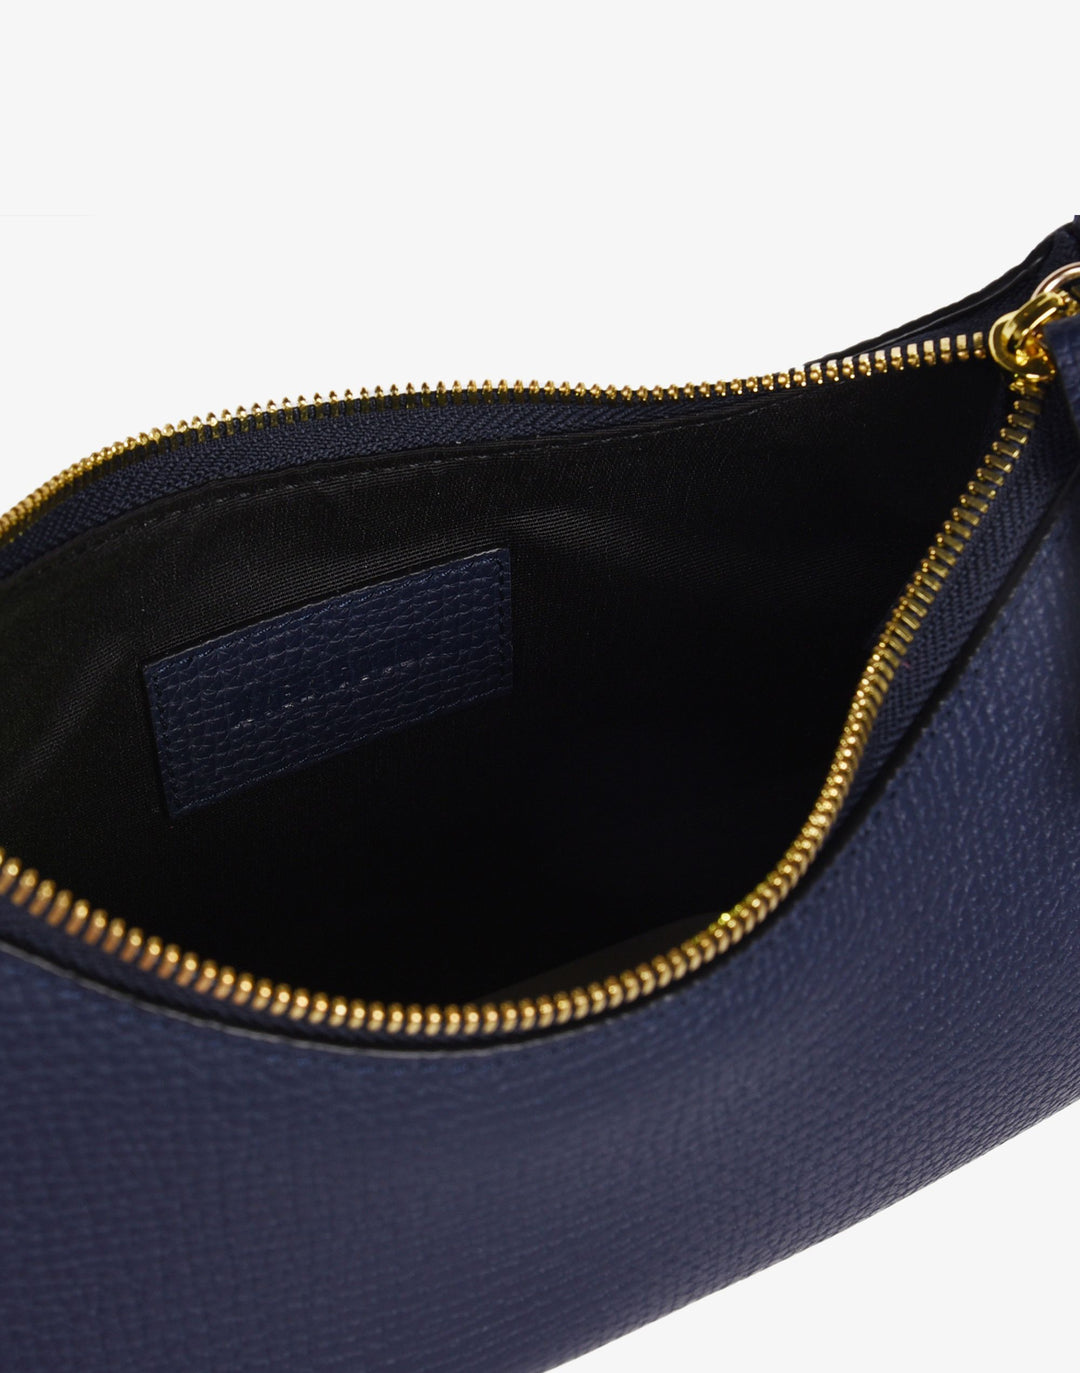 Hyer Goods Luxe Mini Shoulder Bag w/ Buckle